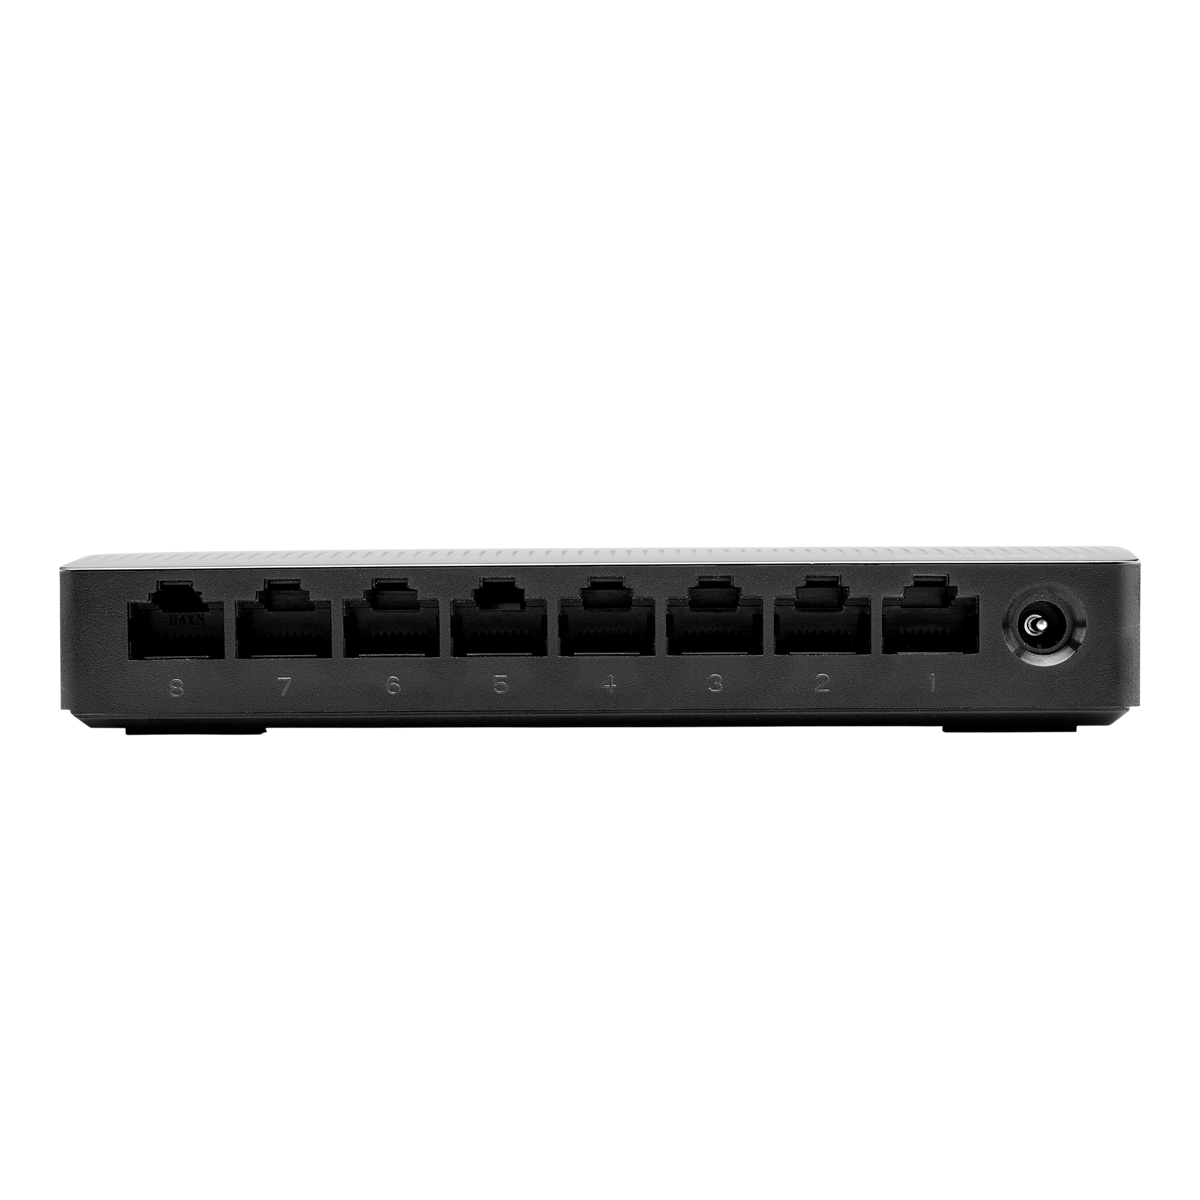 Switch Intelbras 8 Portas GIGA SG 800 Q+